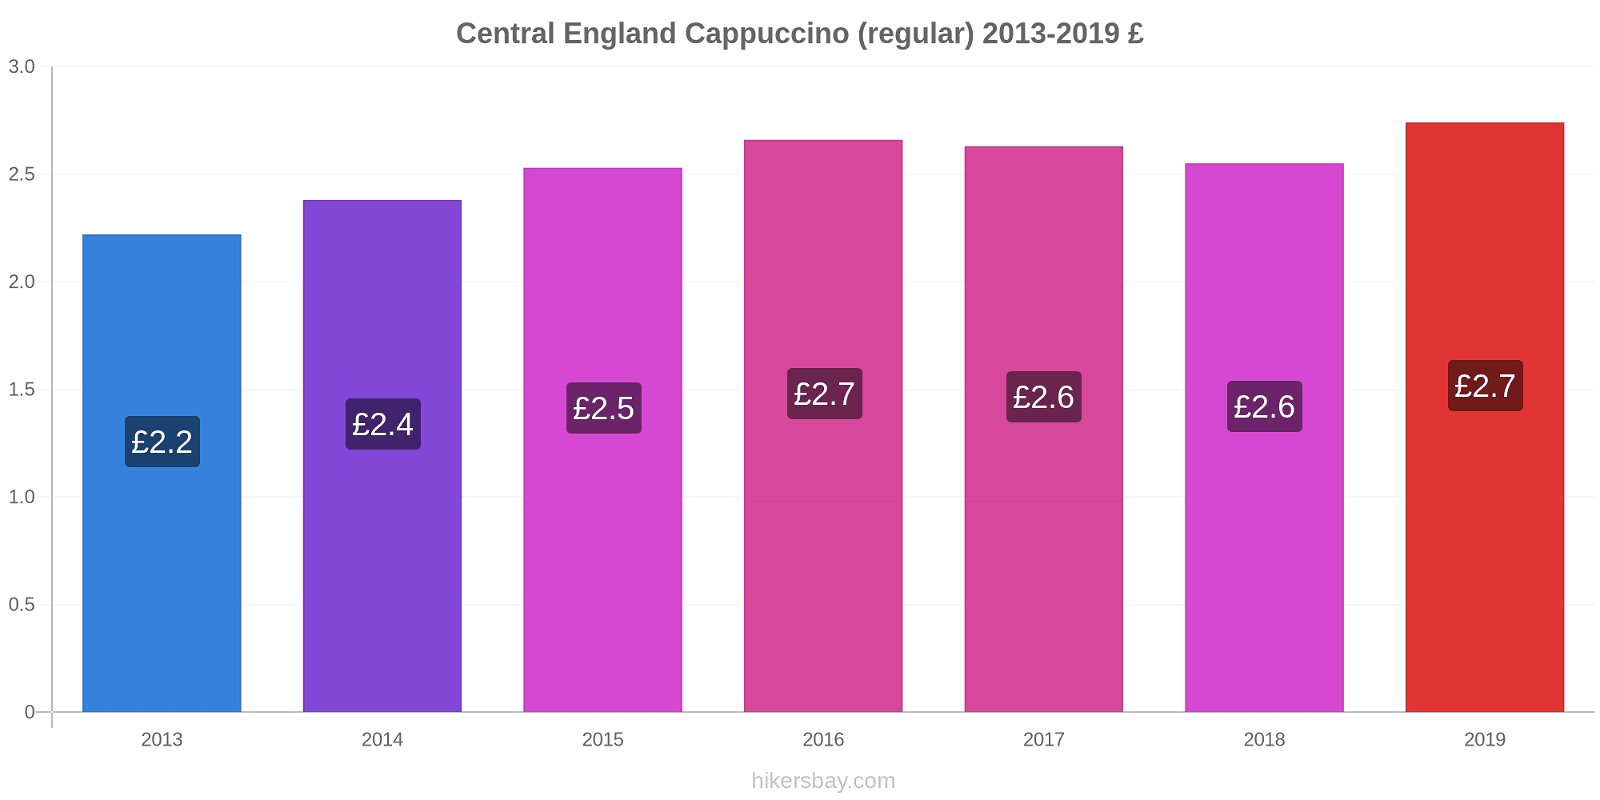 Central England price changes Cappuccino (regular) hikersbay.com